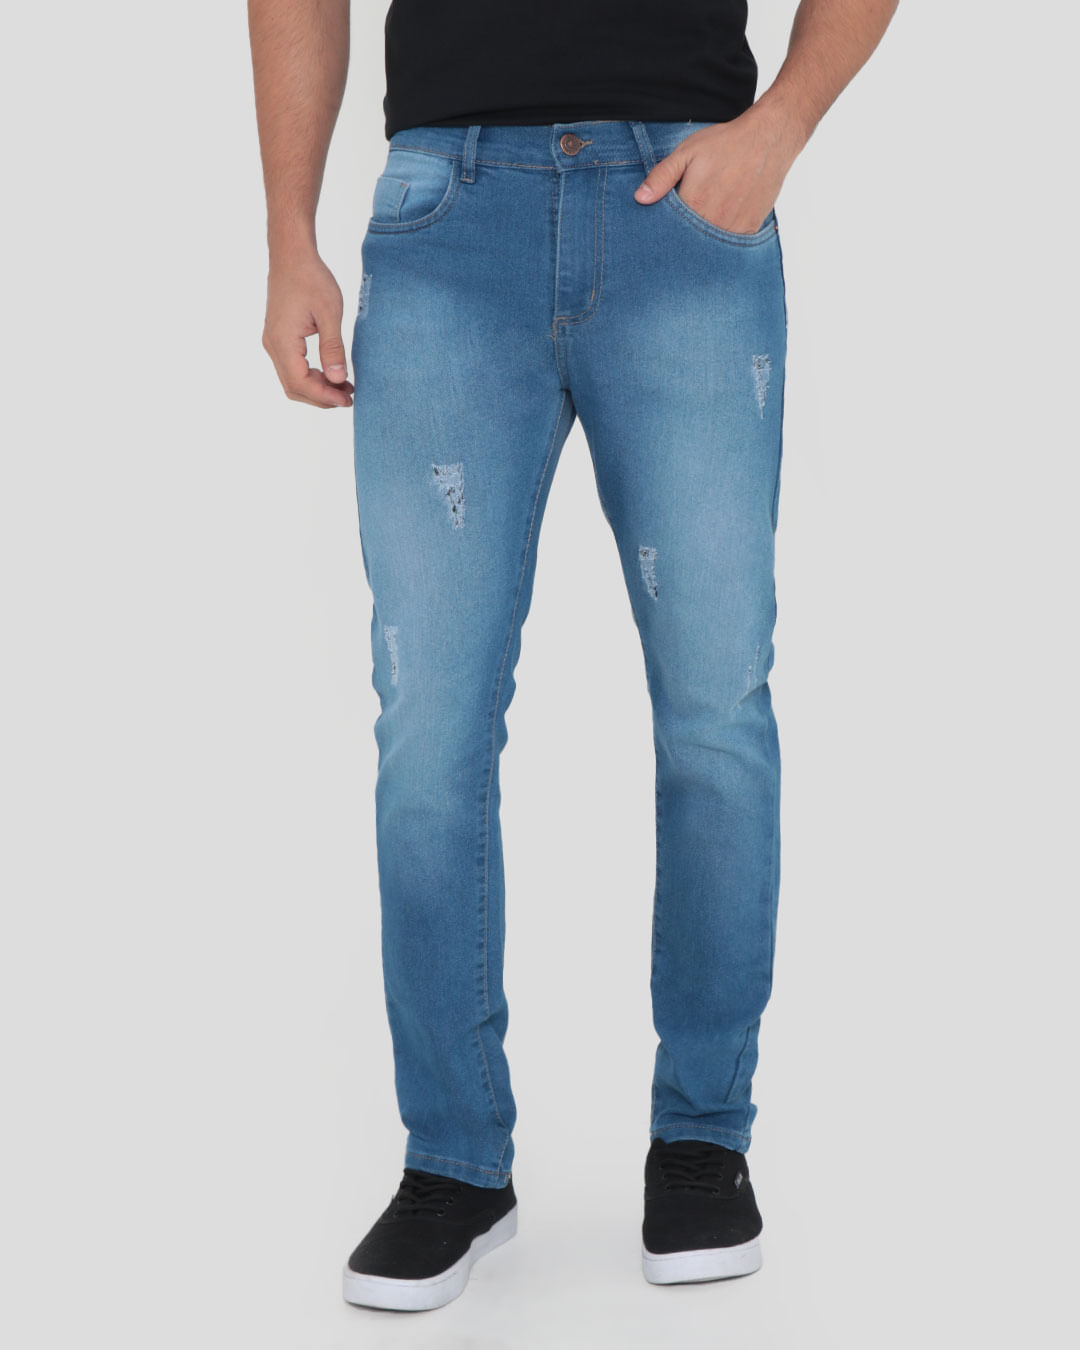 23221000432045-blue-jeans-medio-1